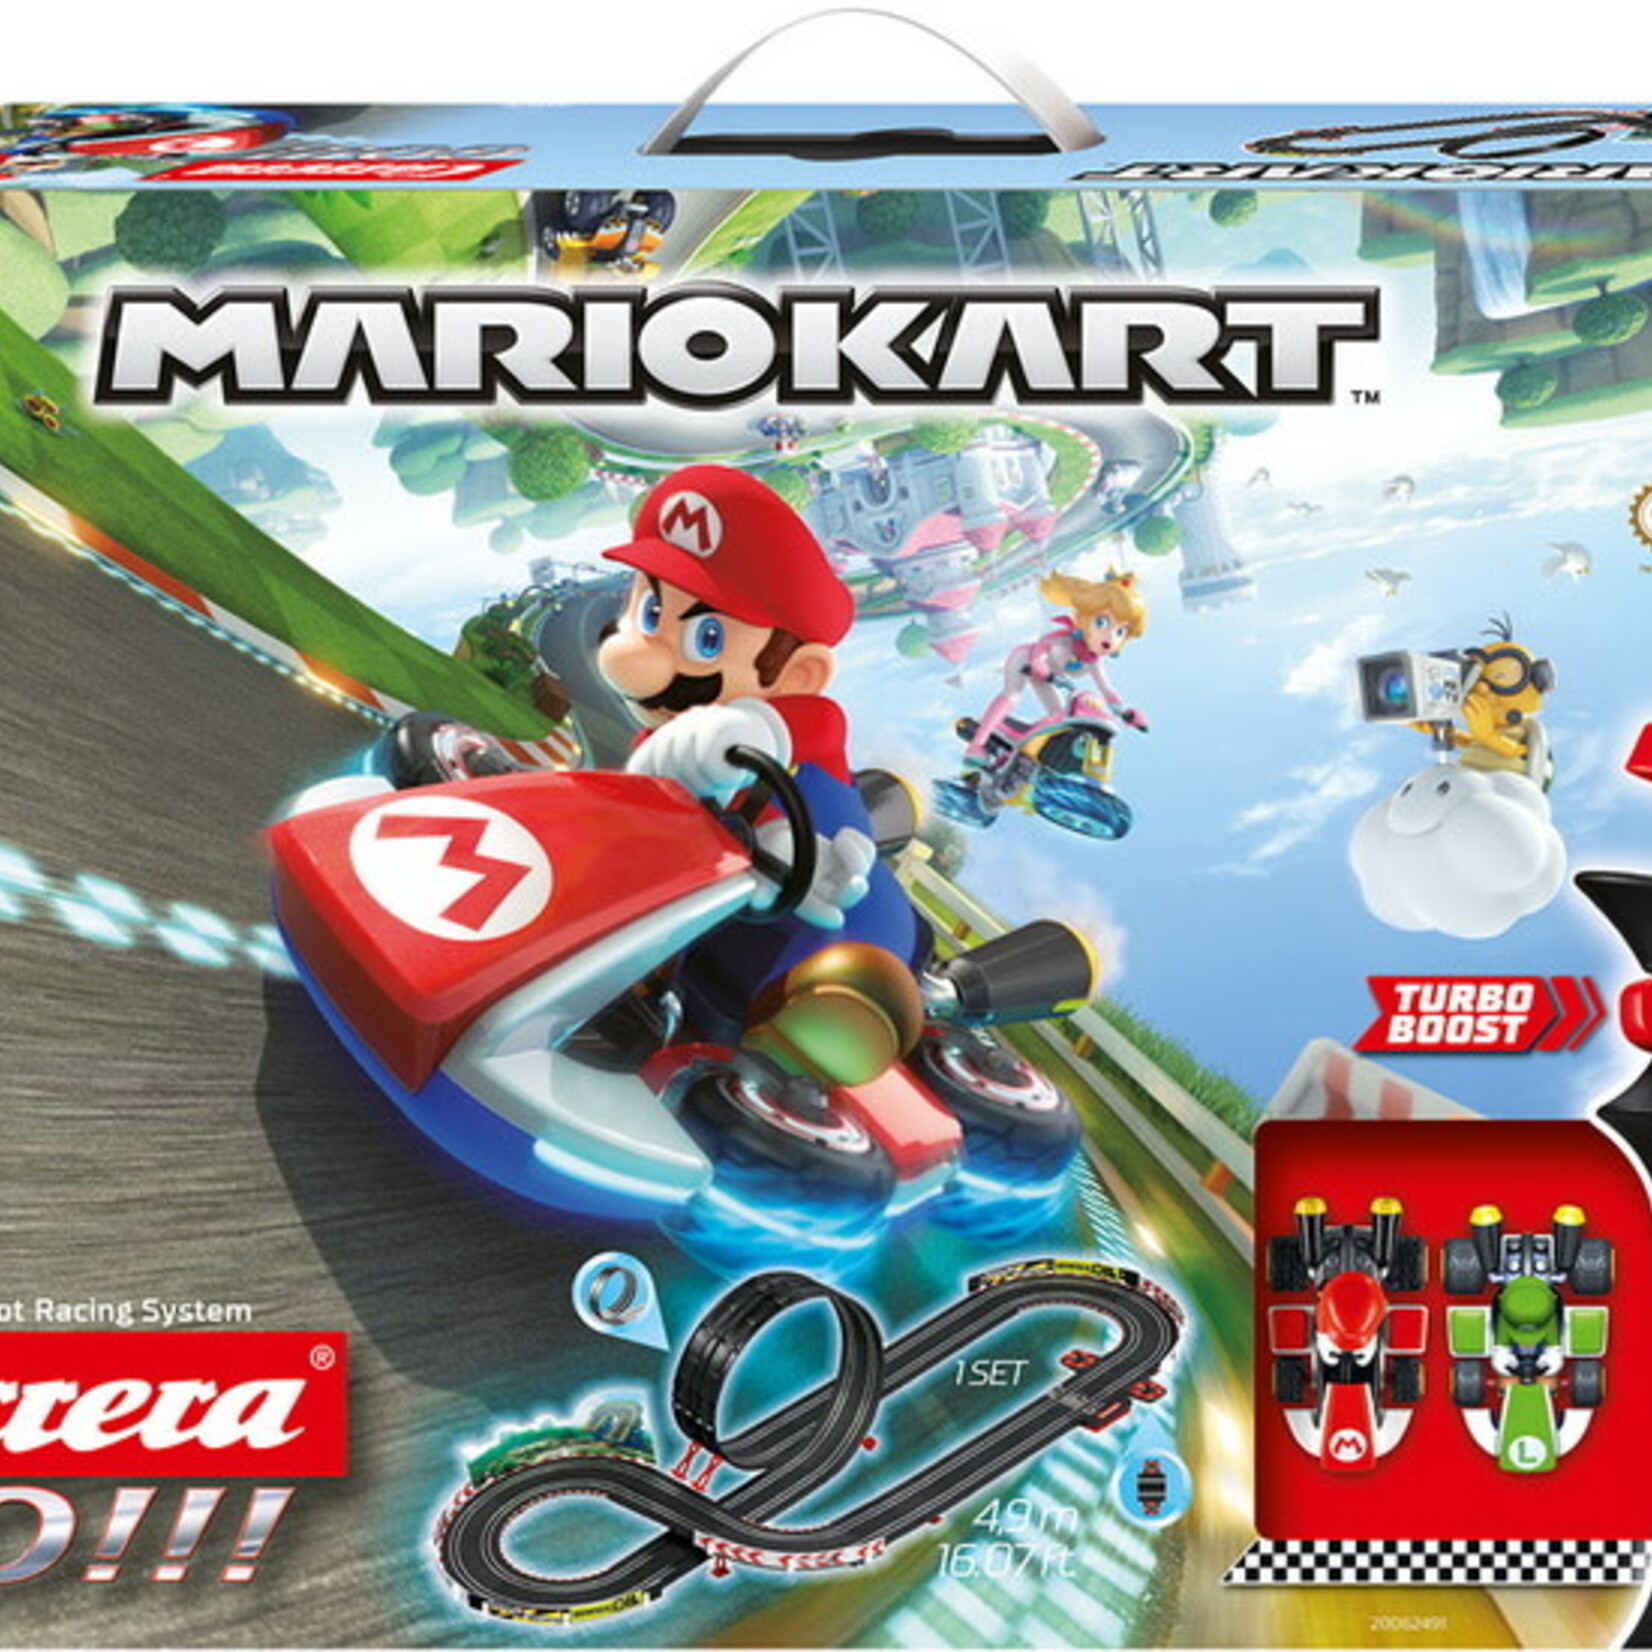 carrera Carrera Mario Kart GO!!! piste de course de 16 pieds de long